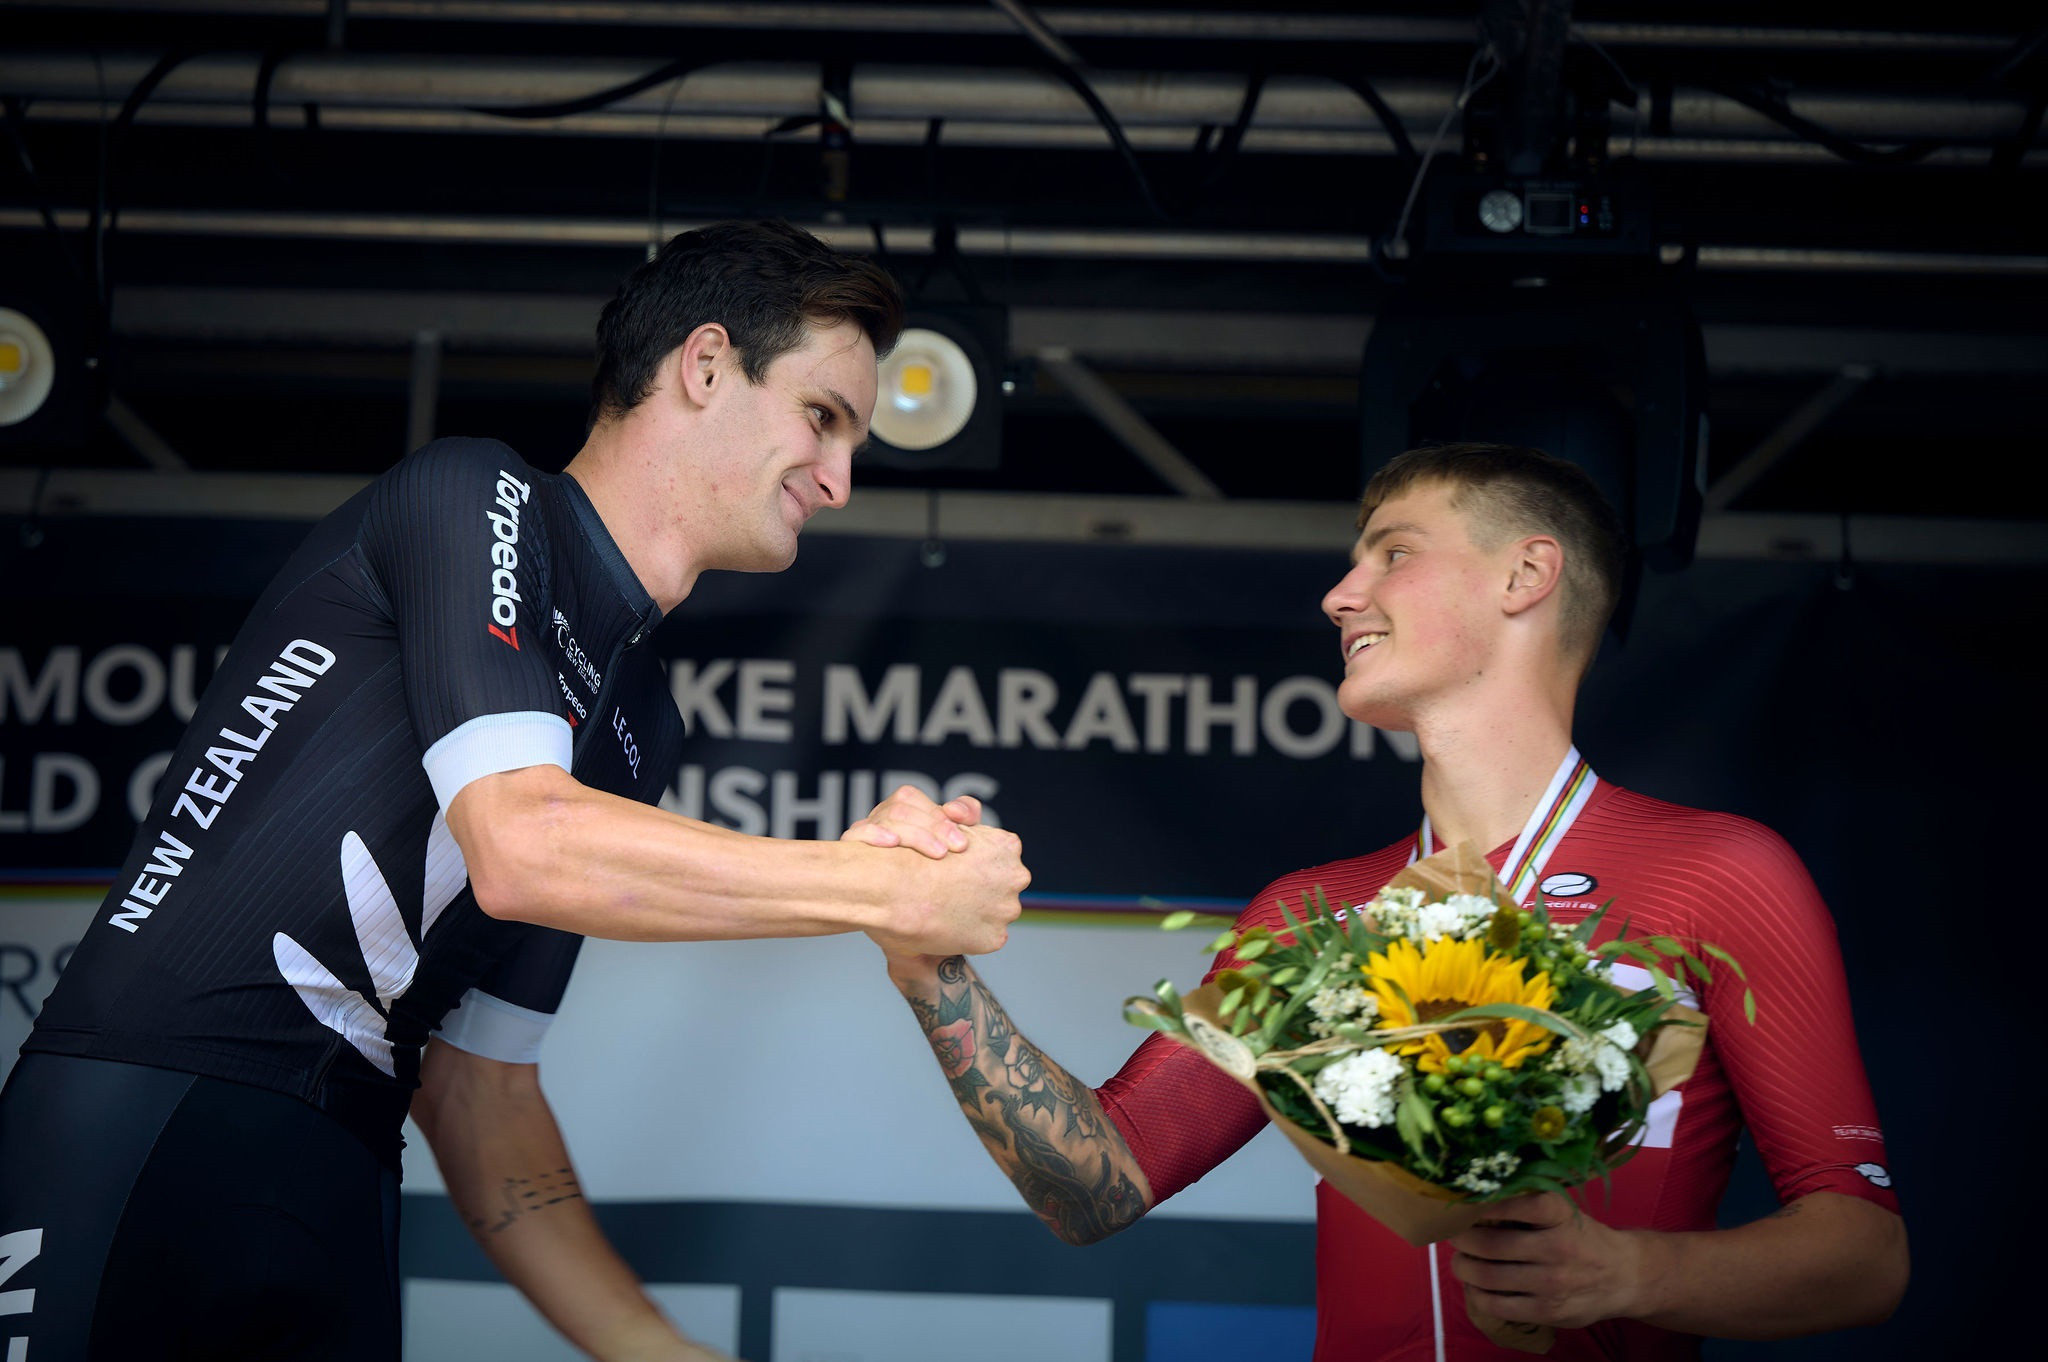 Denmark’s bronze-medallist Simon Andreassen, right, congratulates the victorious Gaze, left ©Ard Jongsma (Triangle Region)